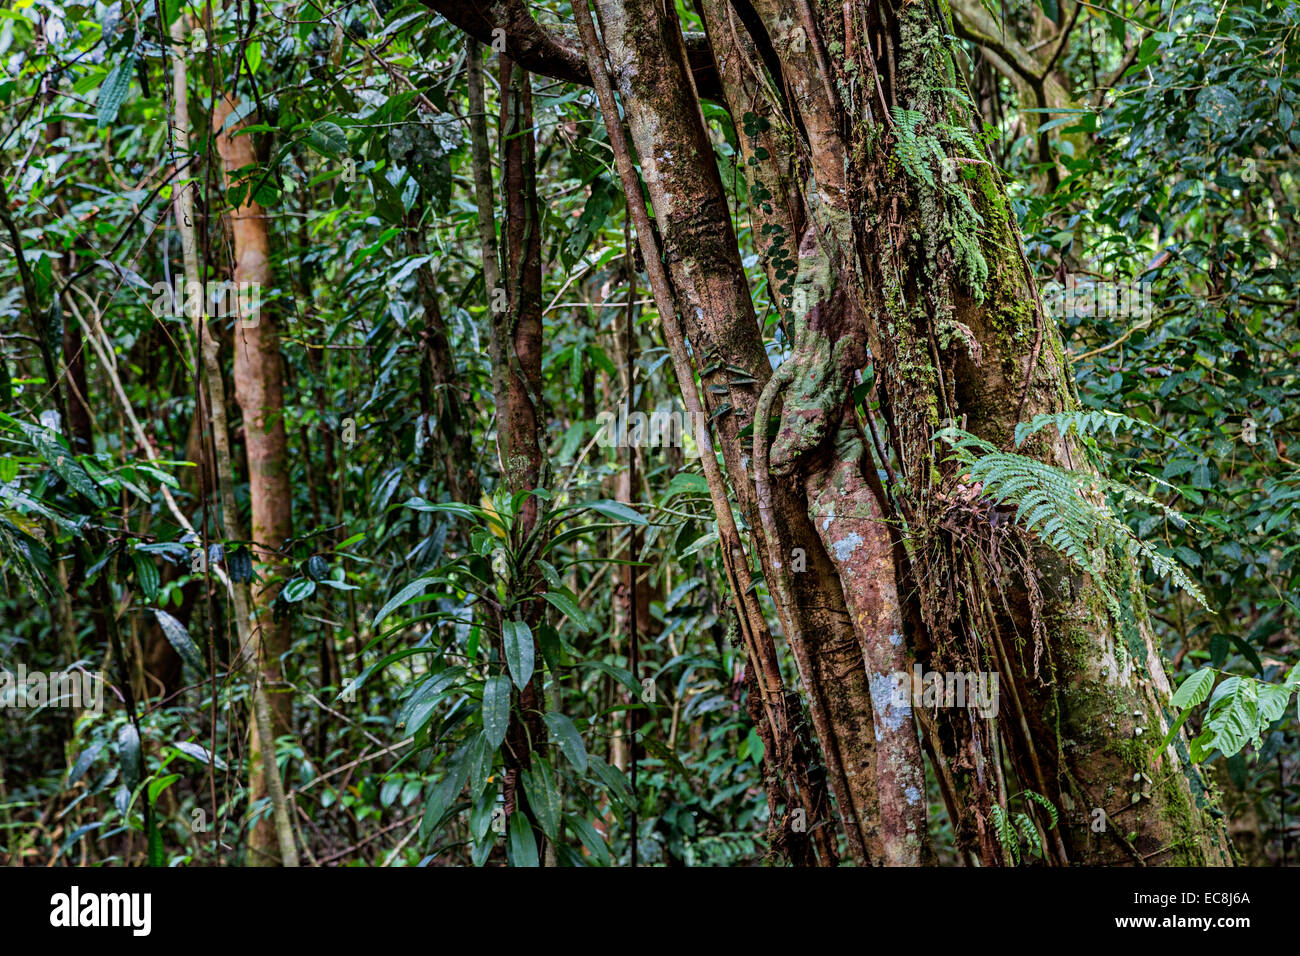 Dense rainforest jungle with epiphytes on trees, Mulu, Malaysia Stock Photo